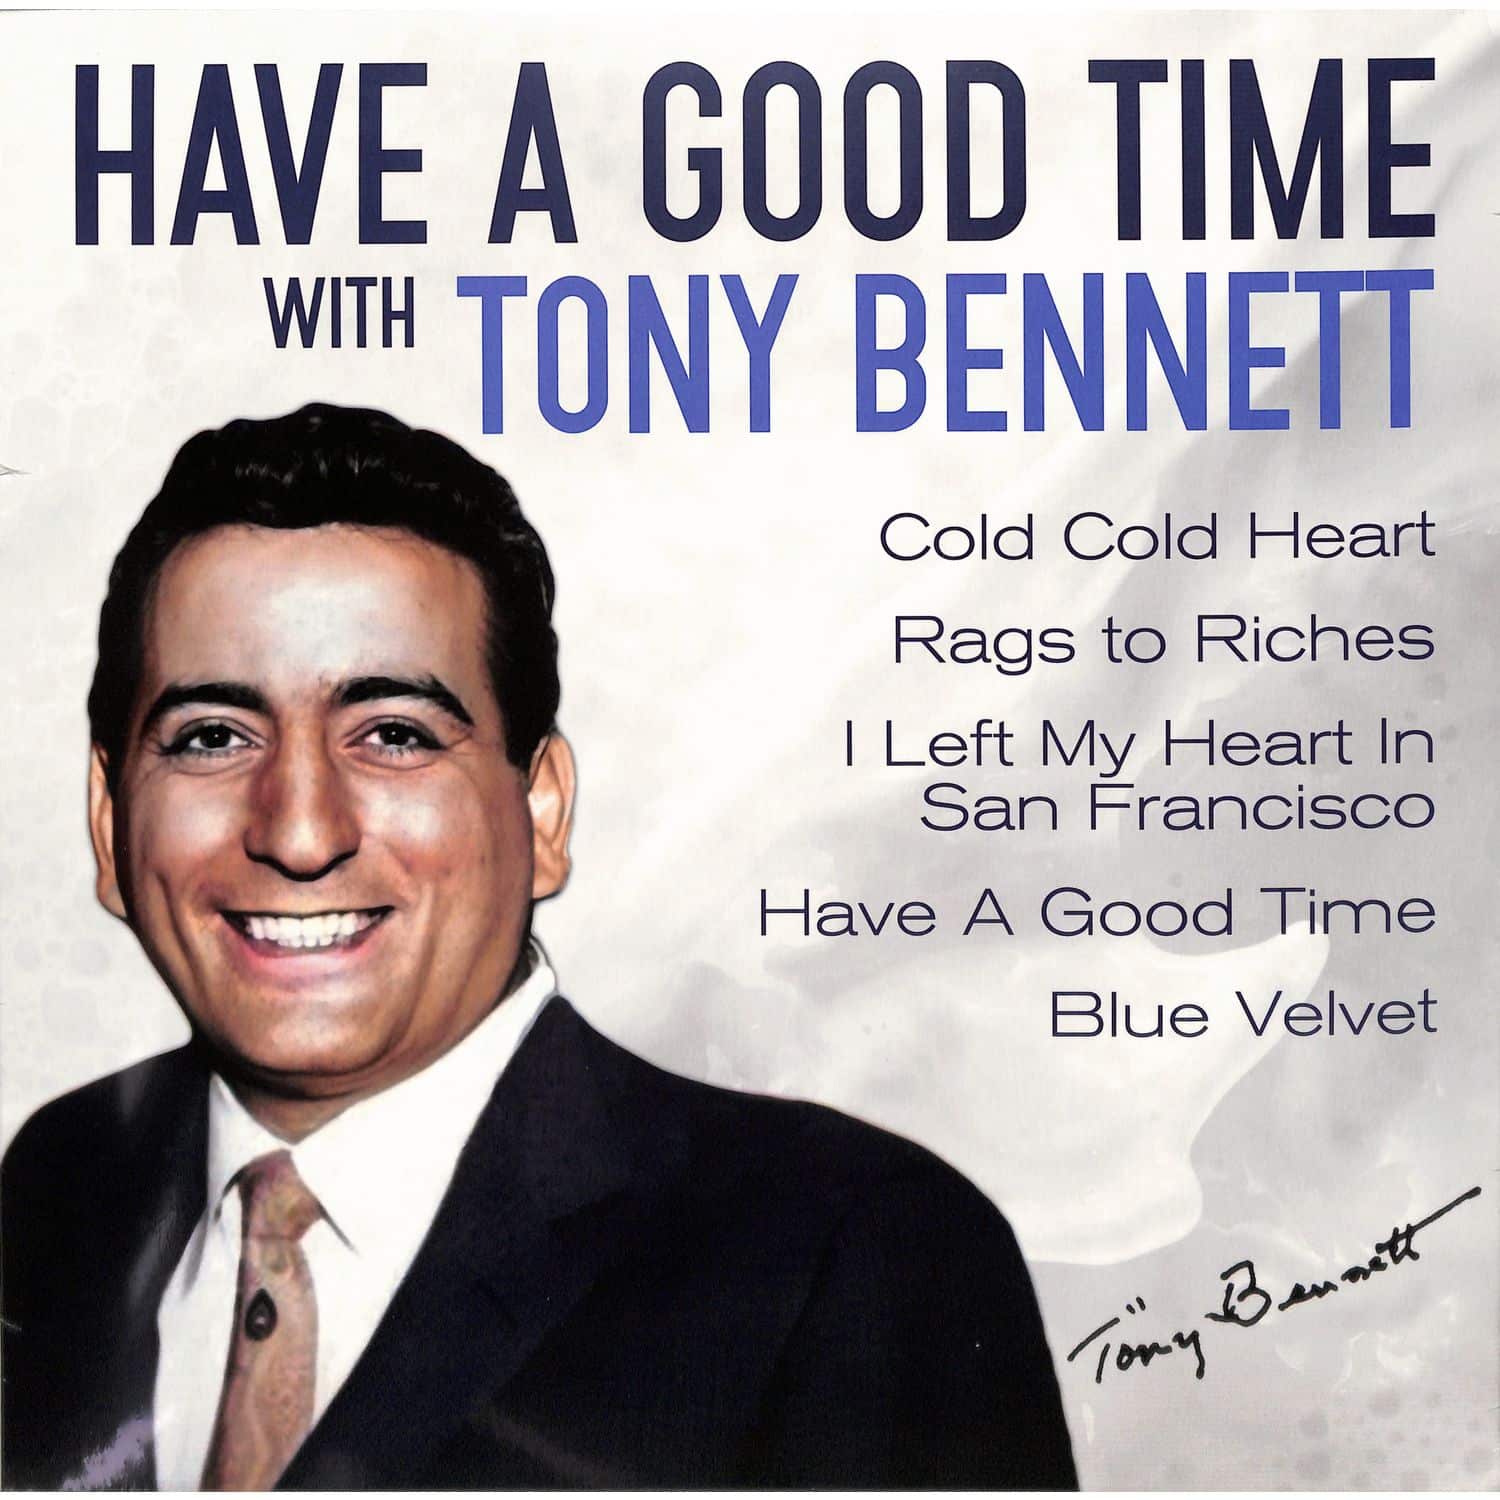 Tony Bennett - HAVE A GOOD TIME WITH TONY BENNETT 